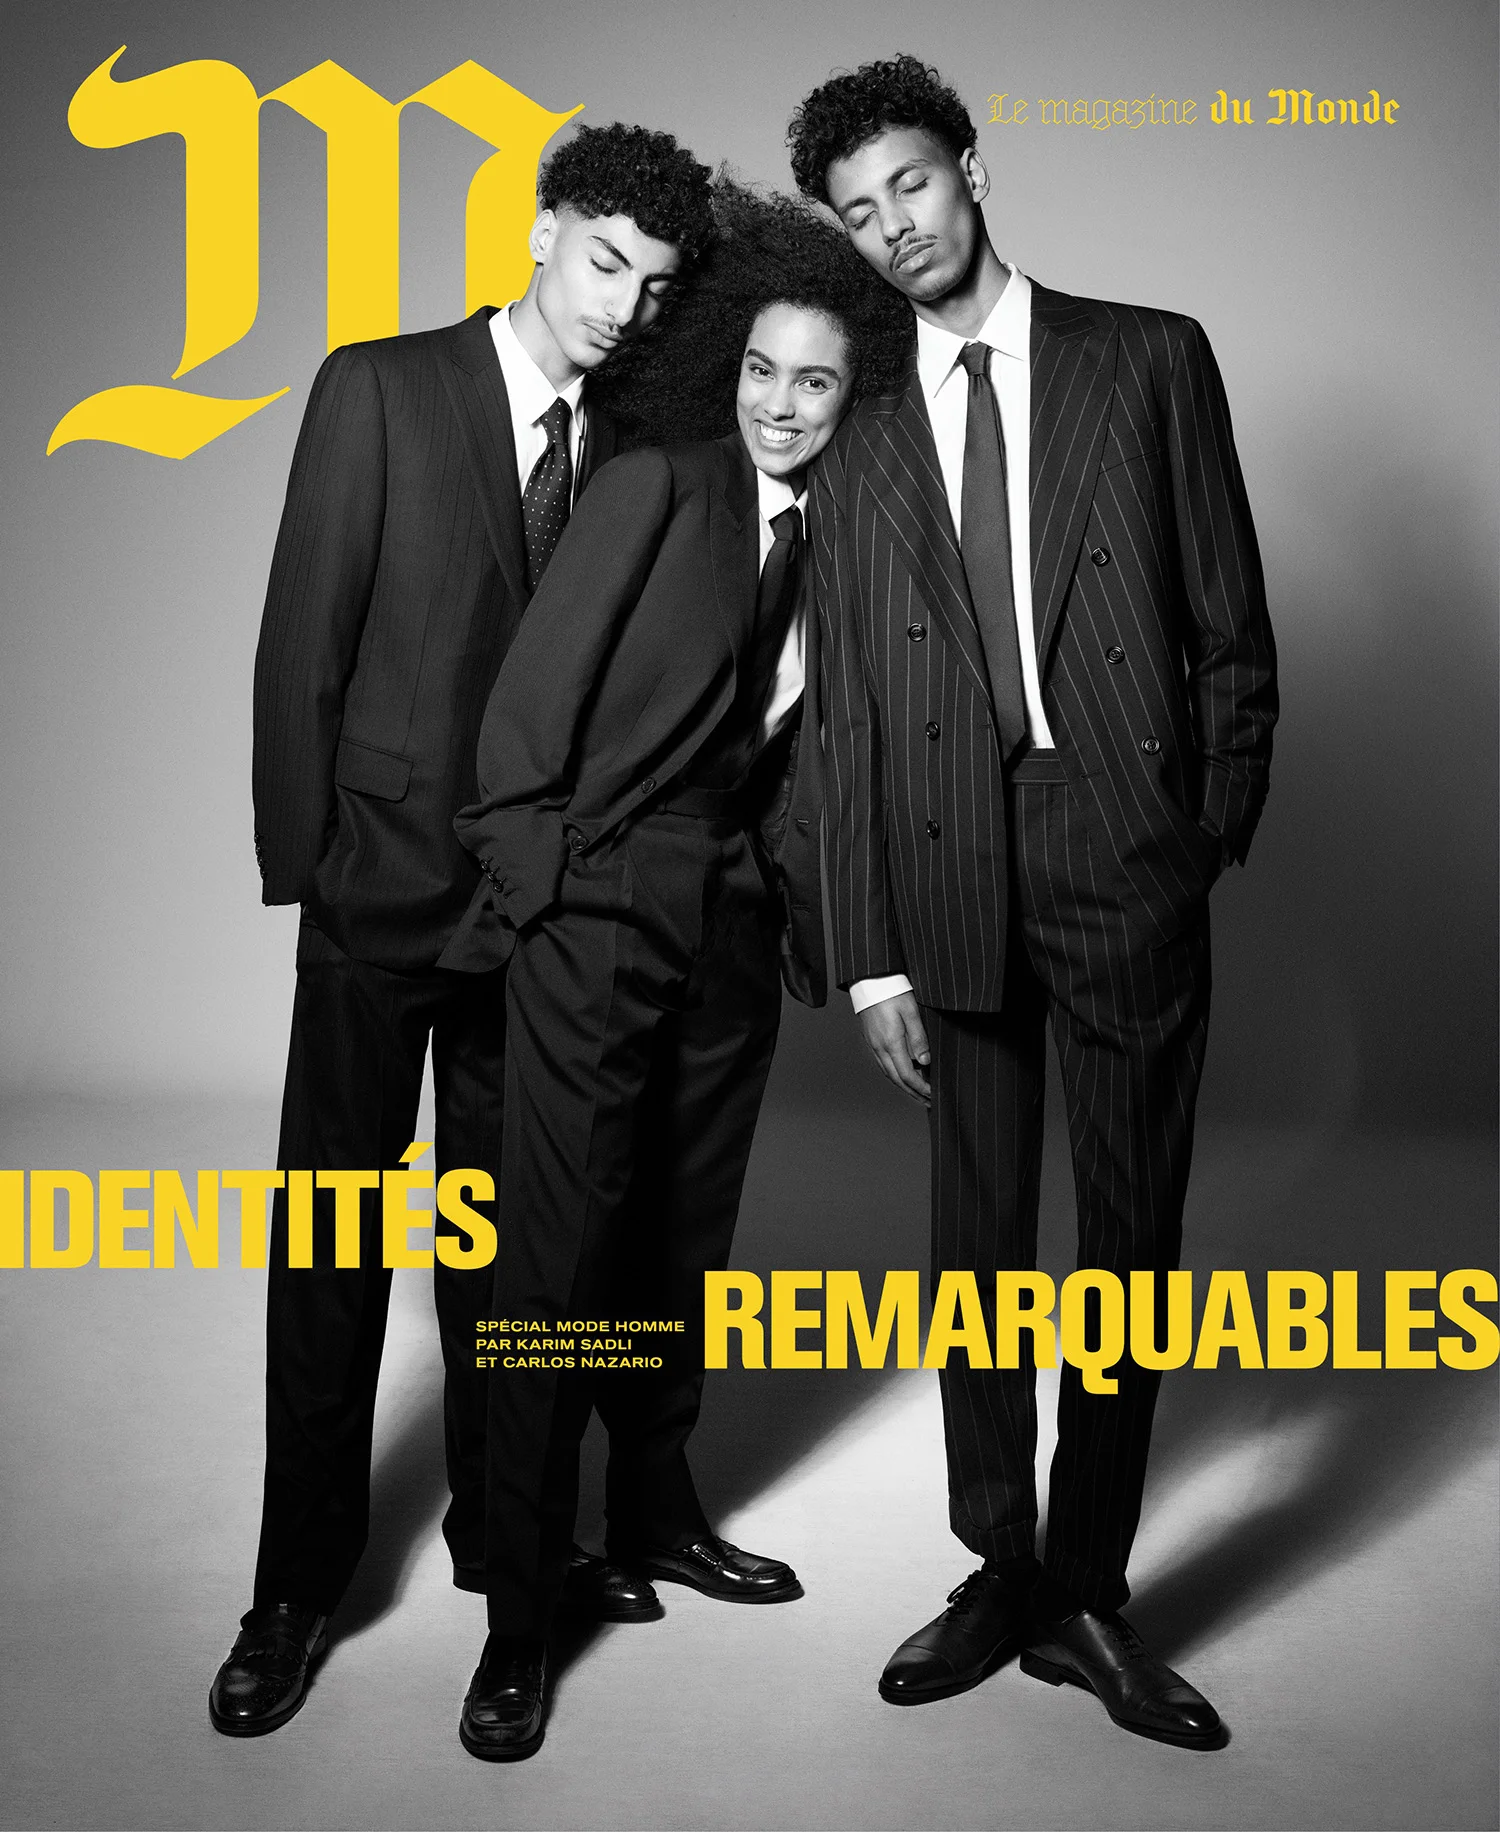 M Le magazine du Monde April 9th, 2022 covers by Karim Sadli